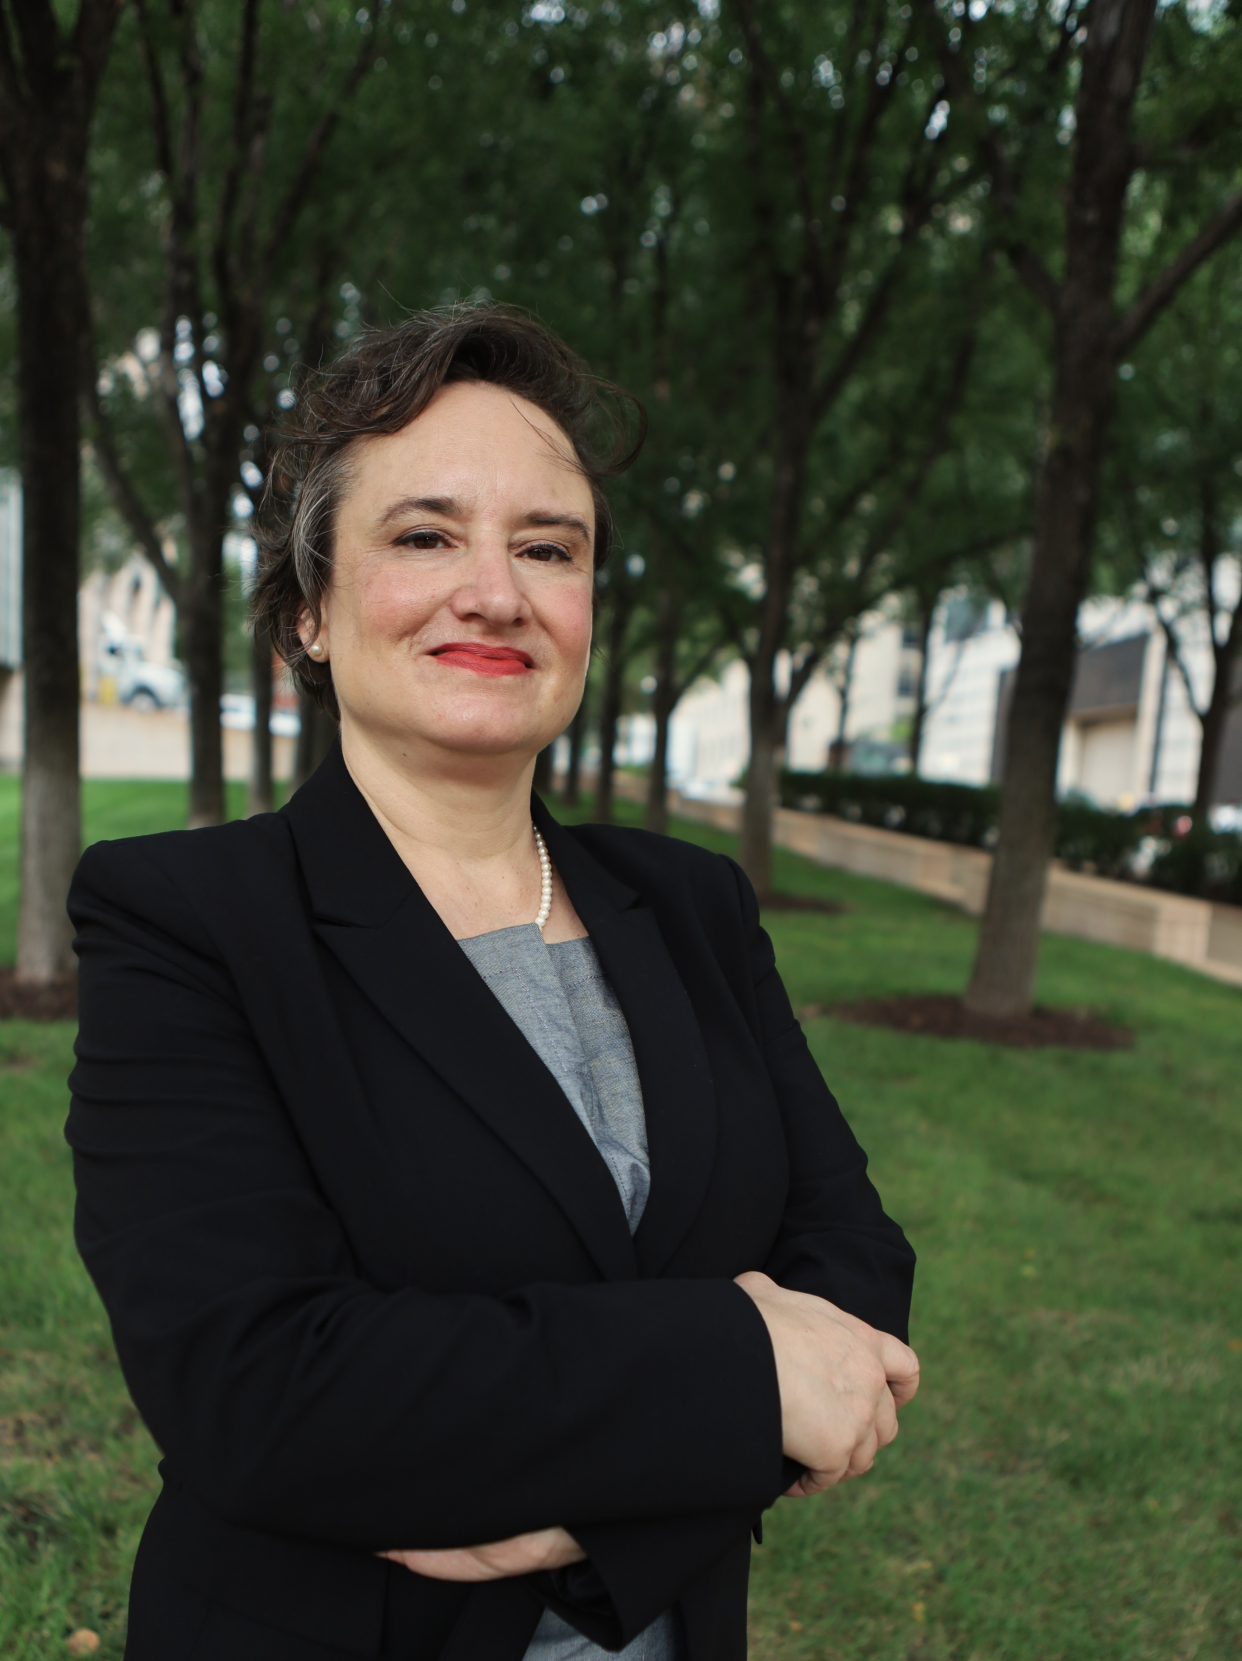 Sarah Unsicker, a Democratic candidate for Missouri Attorney General in 2024.